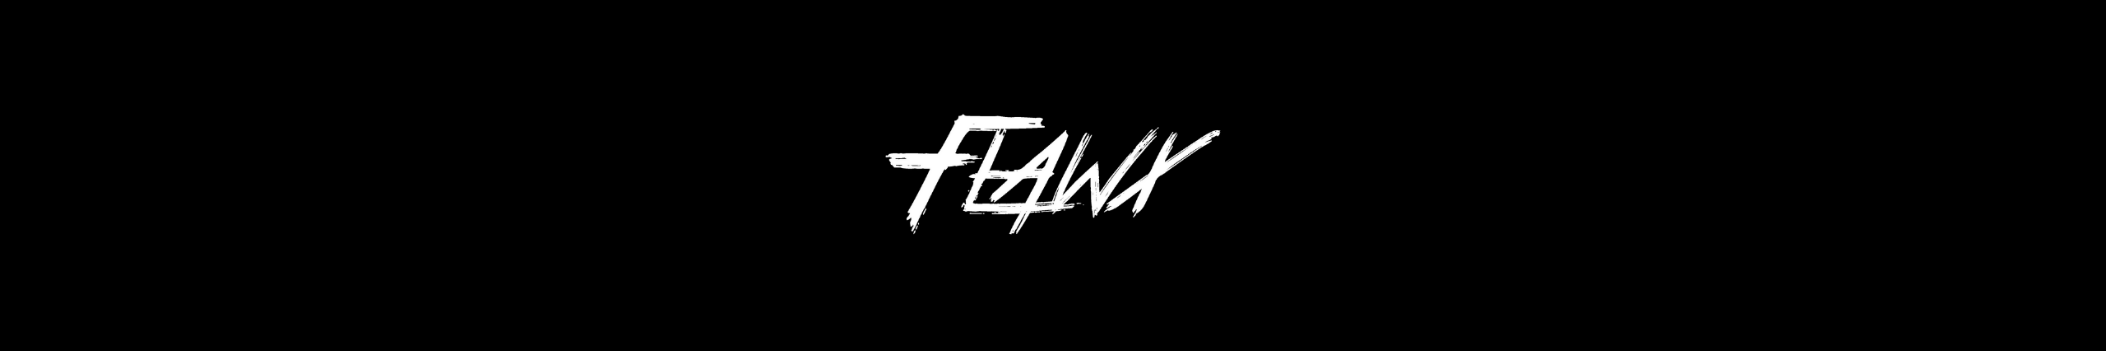 Flawx